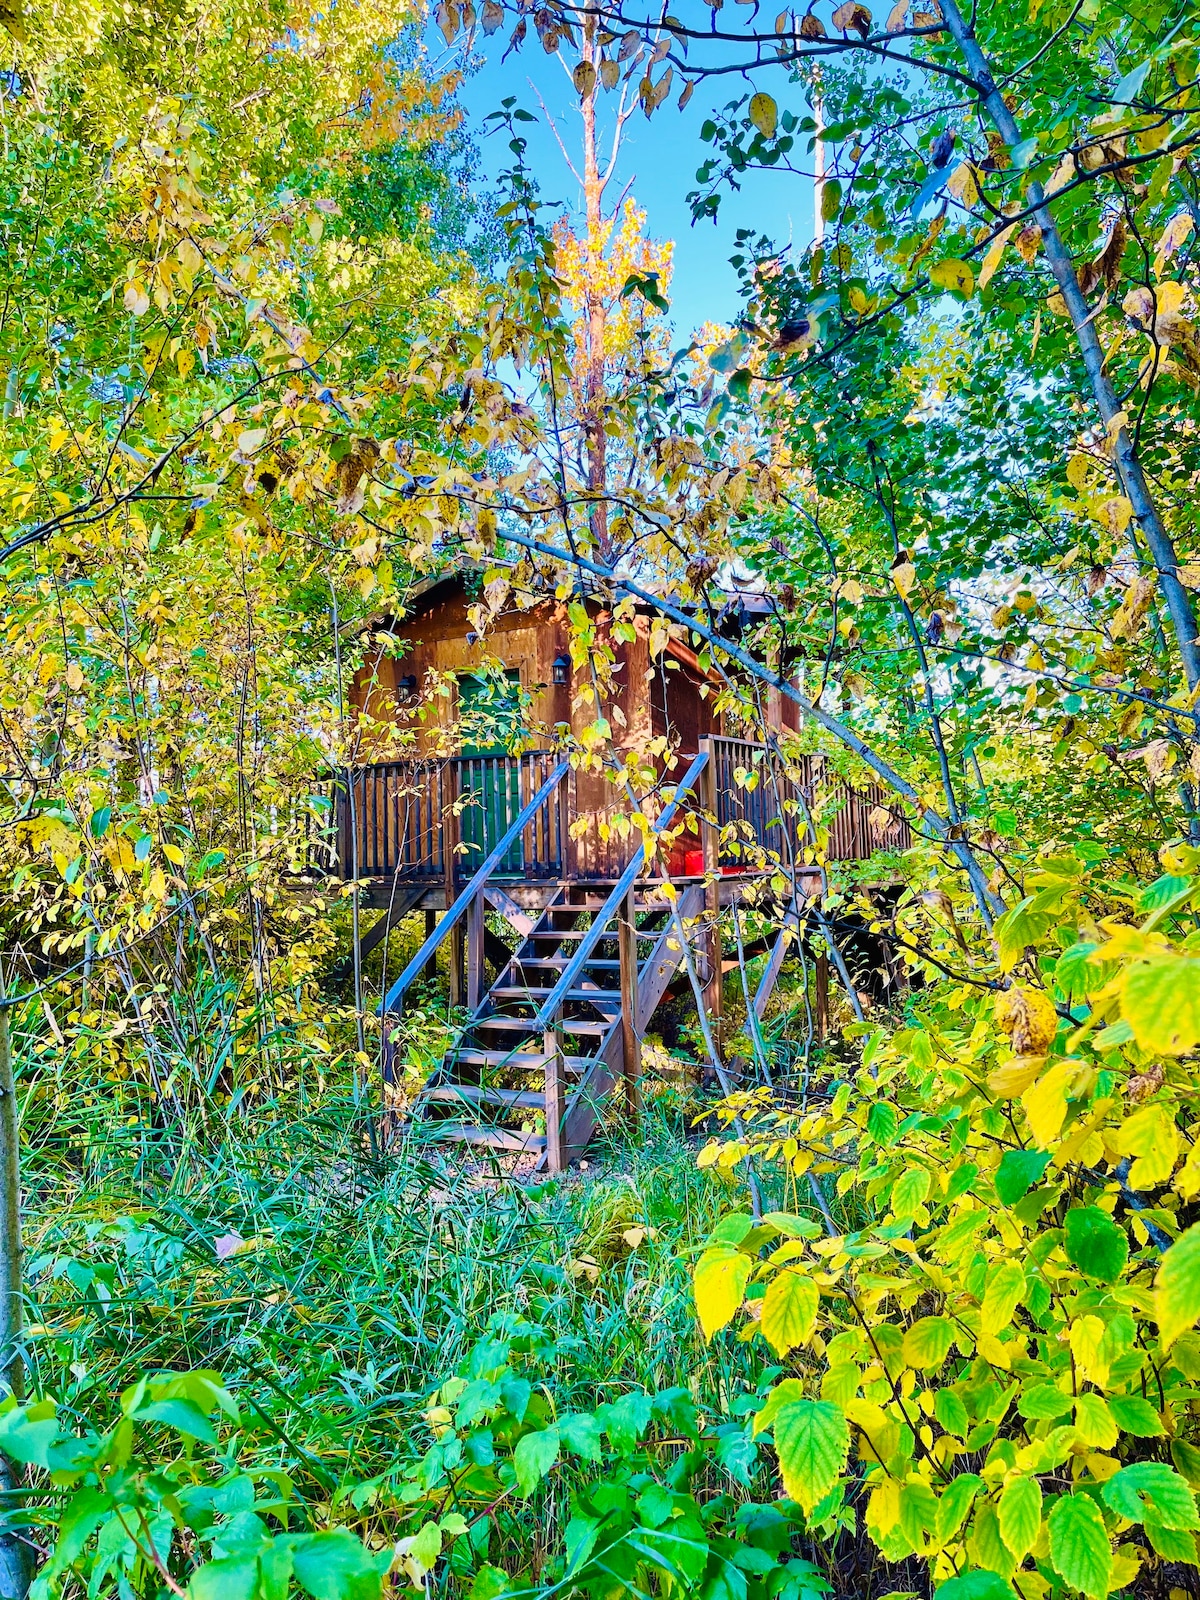 The Wildland Treehouse